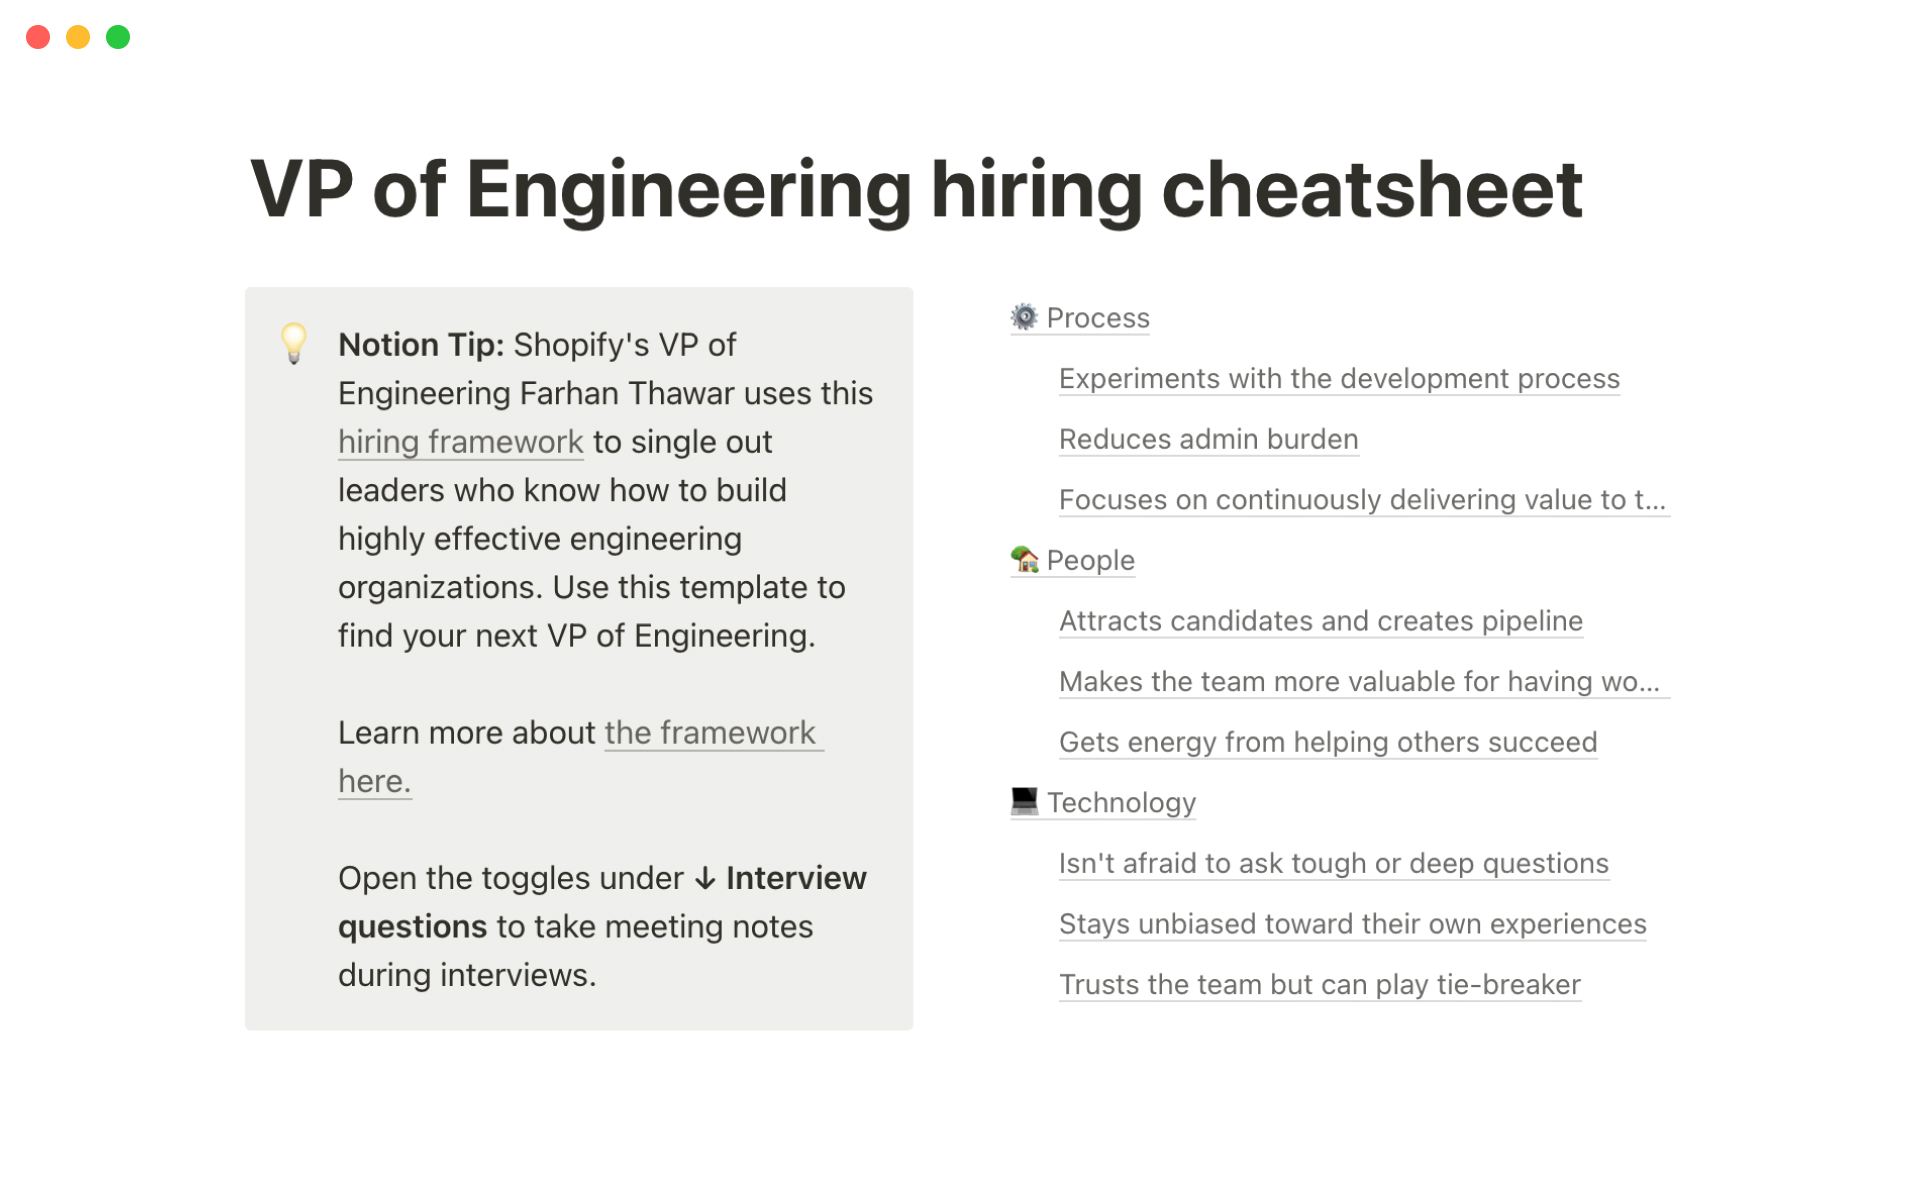 Uma prévia do modelo para Shopify's VP of Engineering hiring cheatsheet